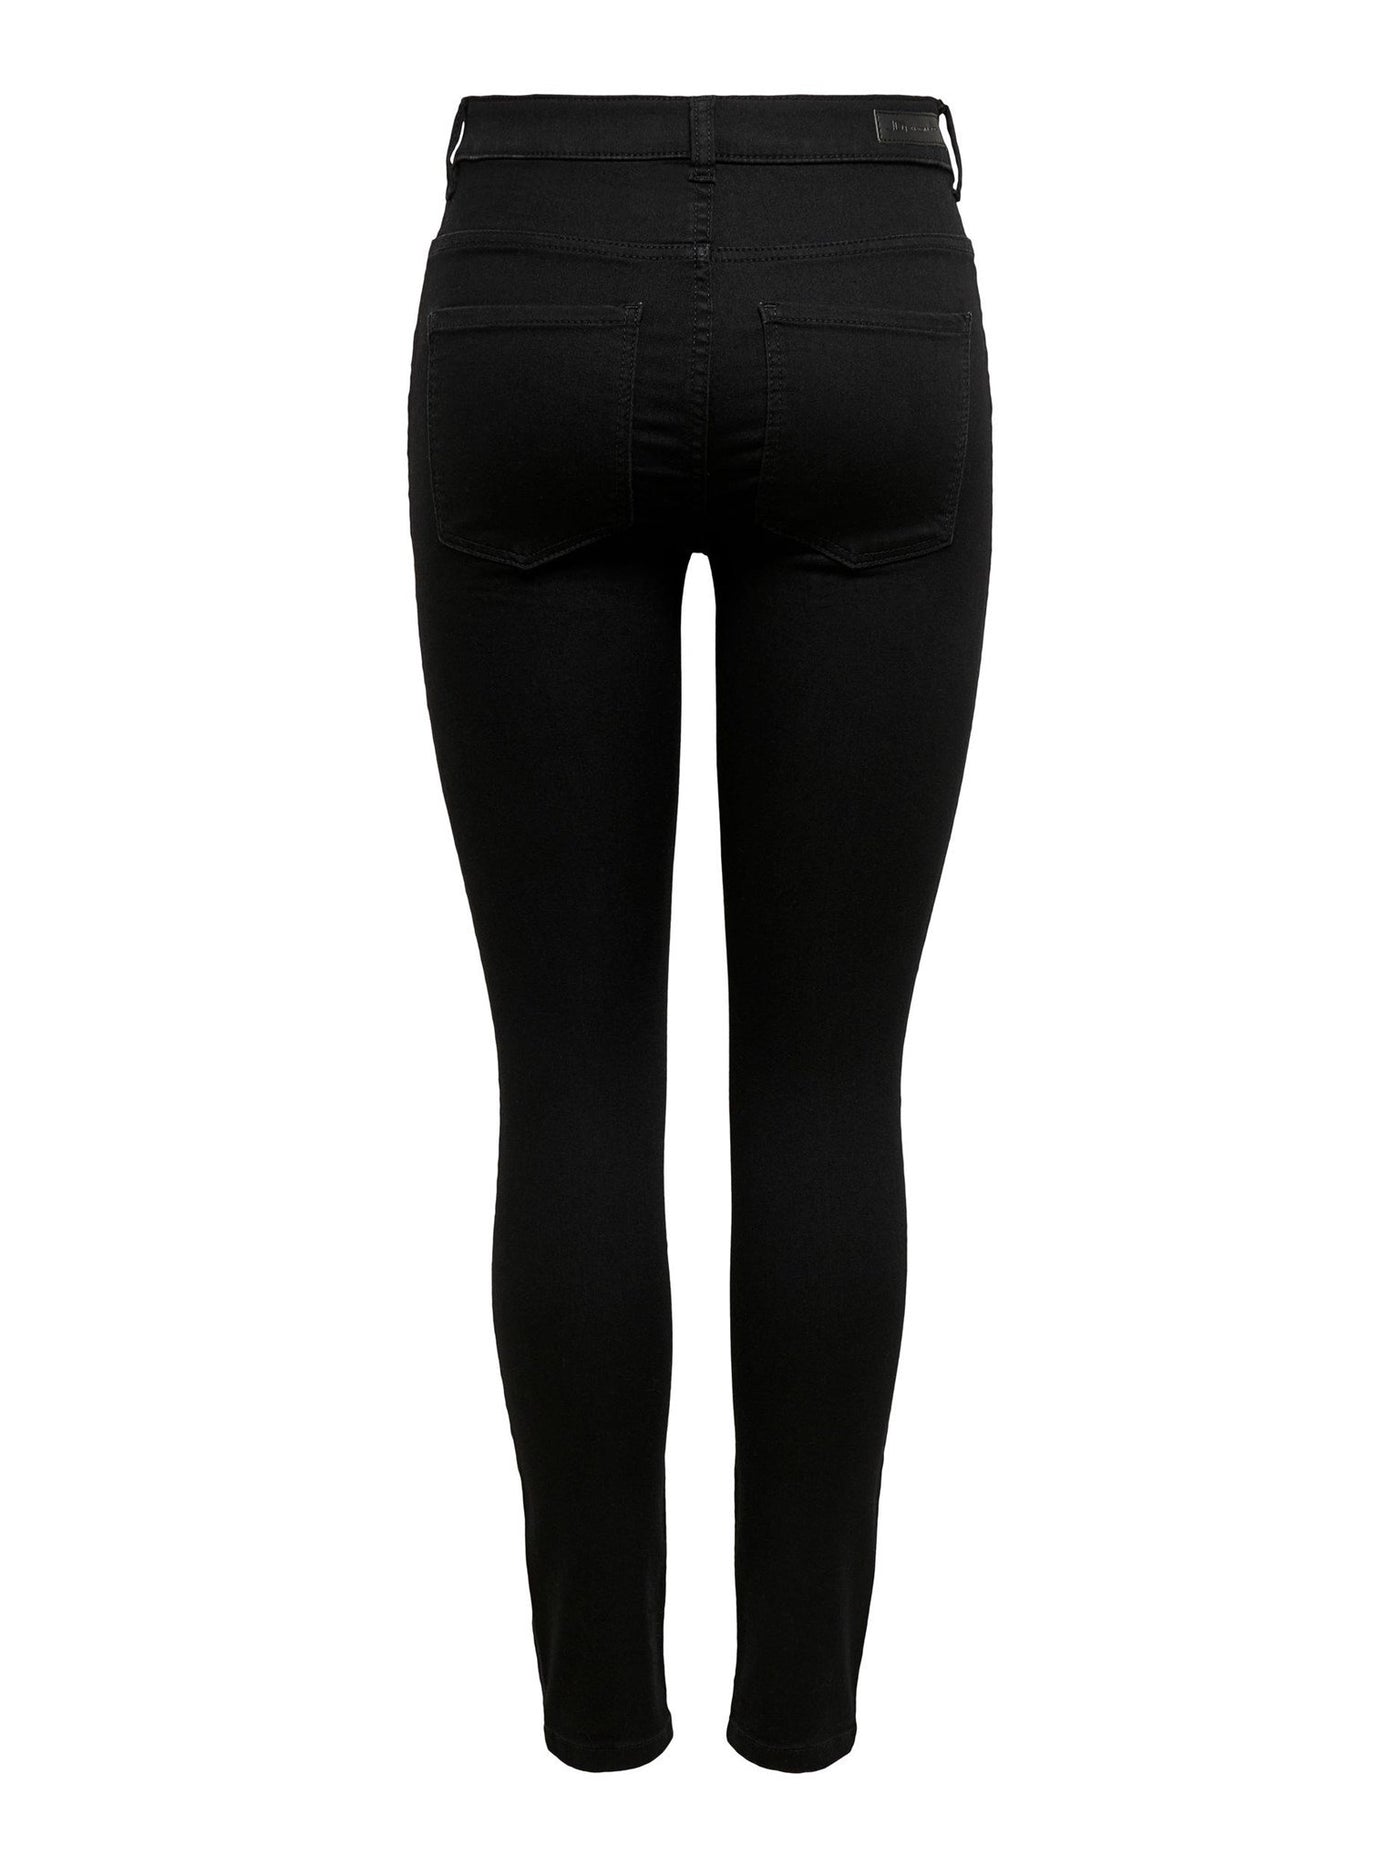 Performance Jeans - Sort (high waist) - Jacqueline de Yong - Sort 6